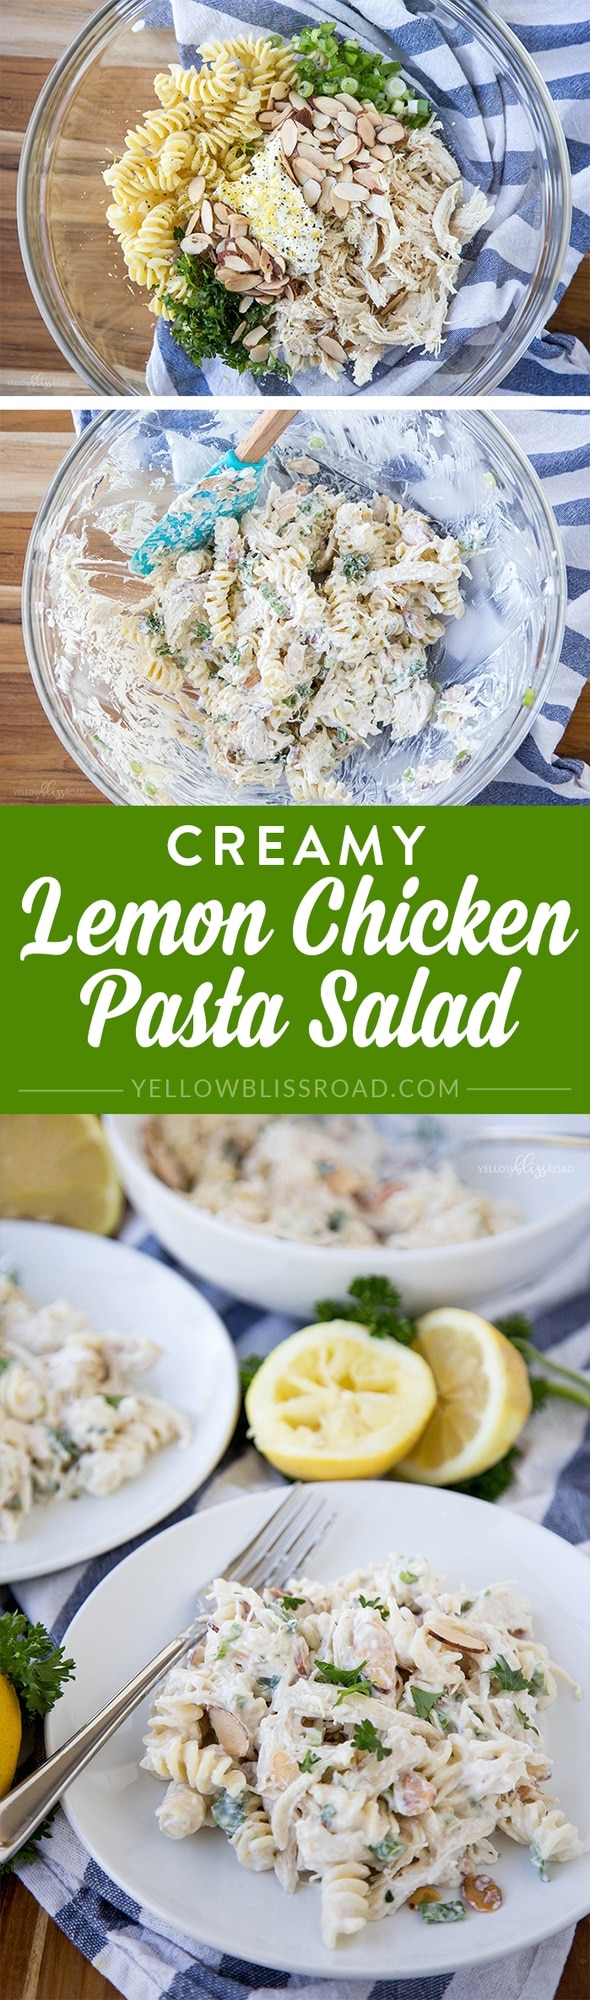 Creamy Lemon Chicken Pasta Salad - Chicken Salad with Pasta and a tangy, creamy lemon and Greek yogurt dressing.